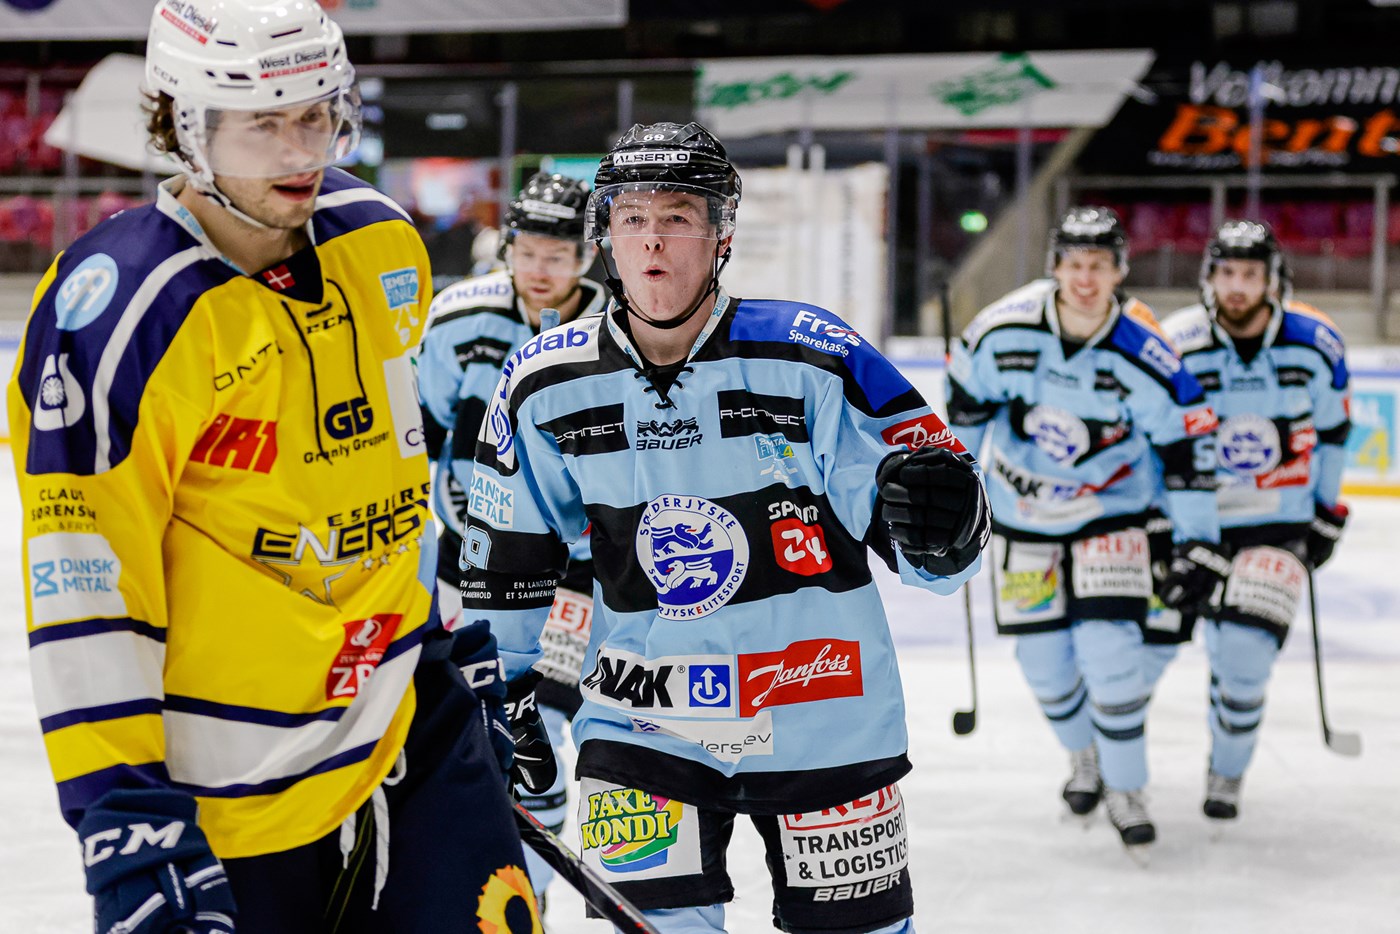 Foto: Danmarks Ishockey Union